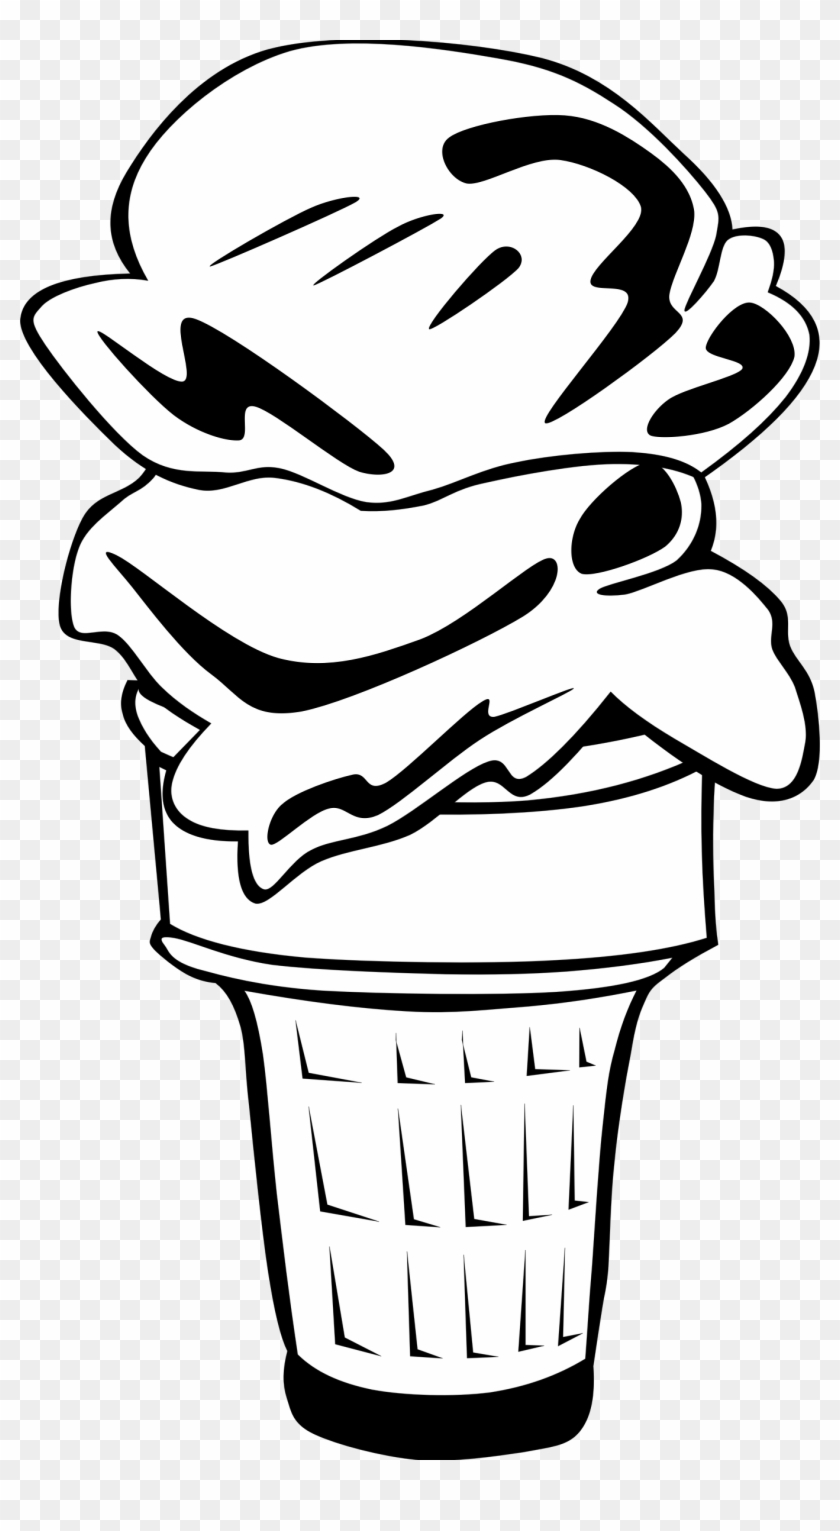 Big Image - Ice Cream Cone Clip Art - Png Download